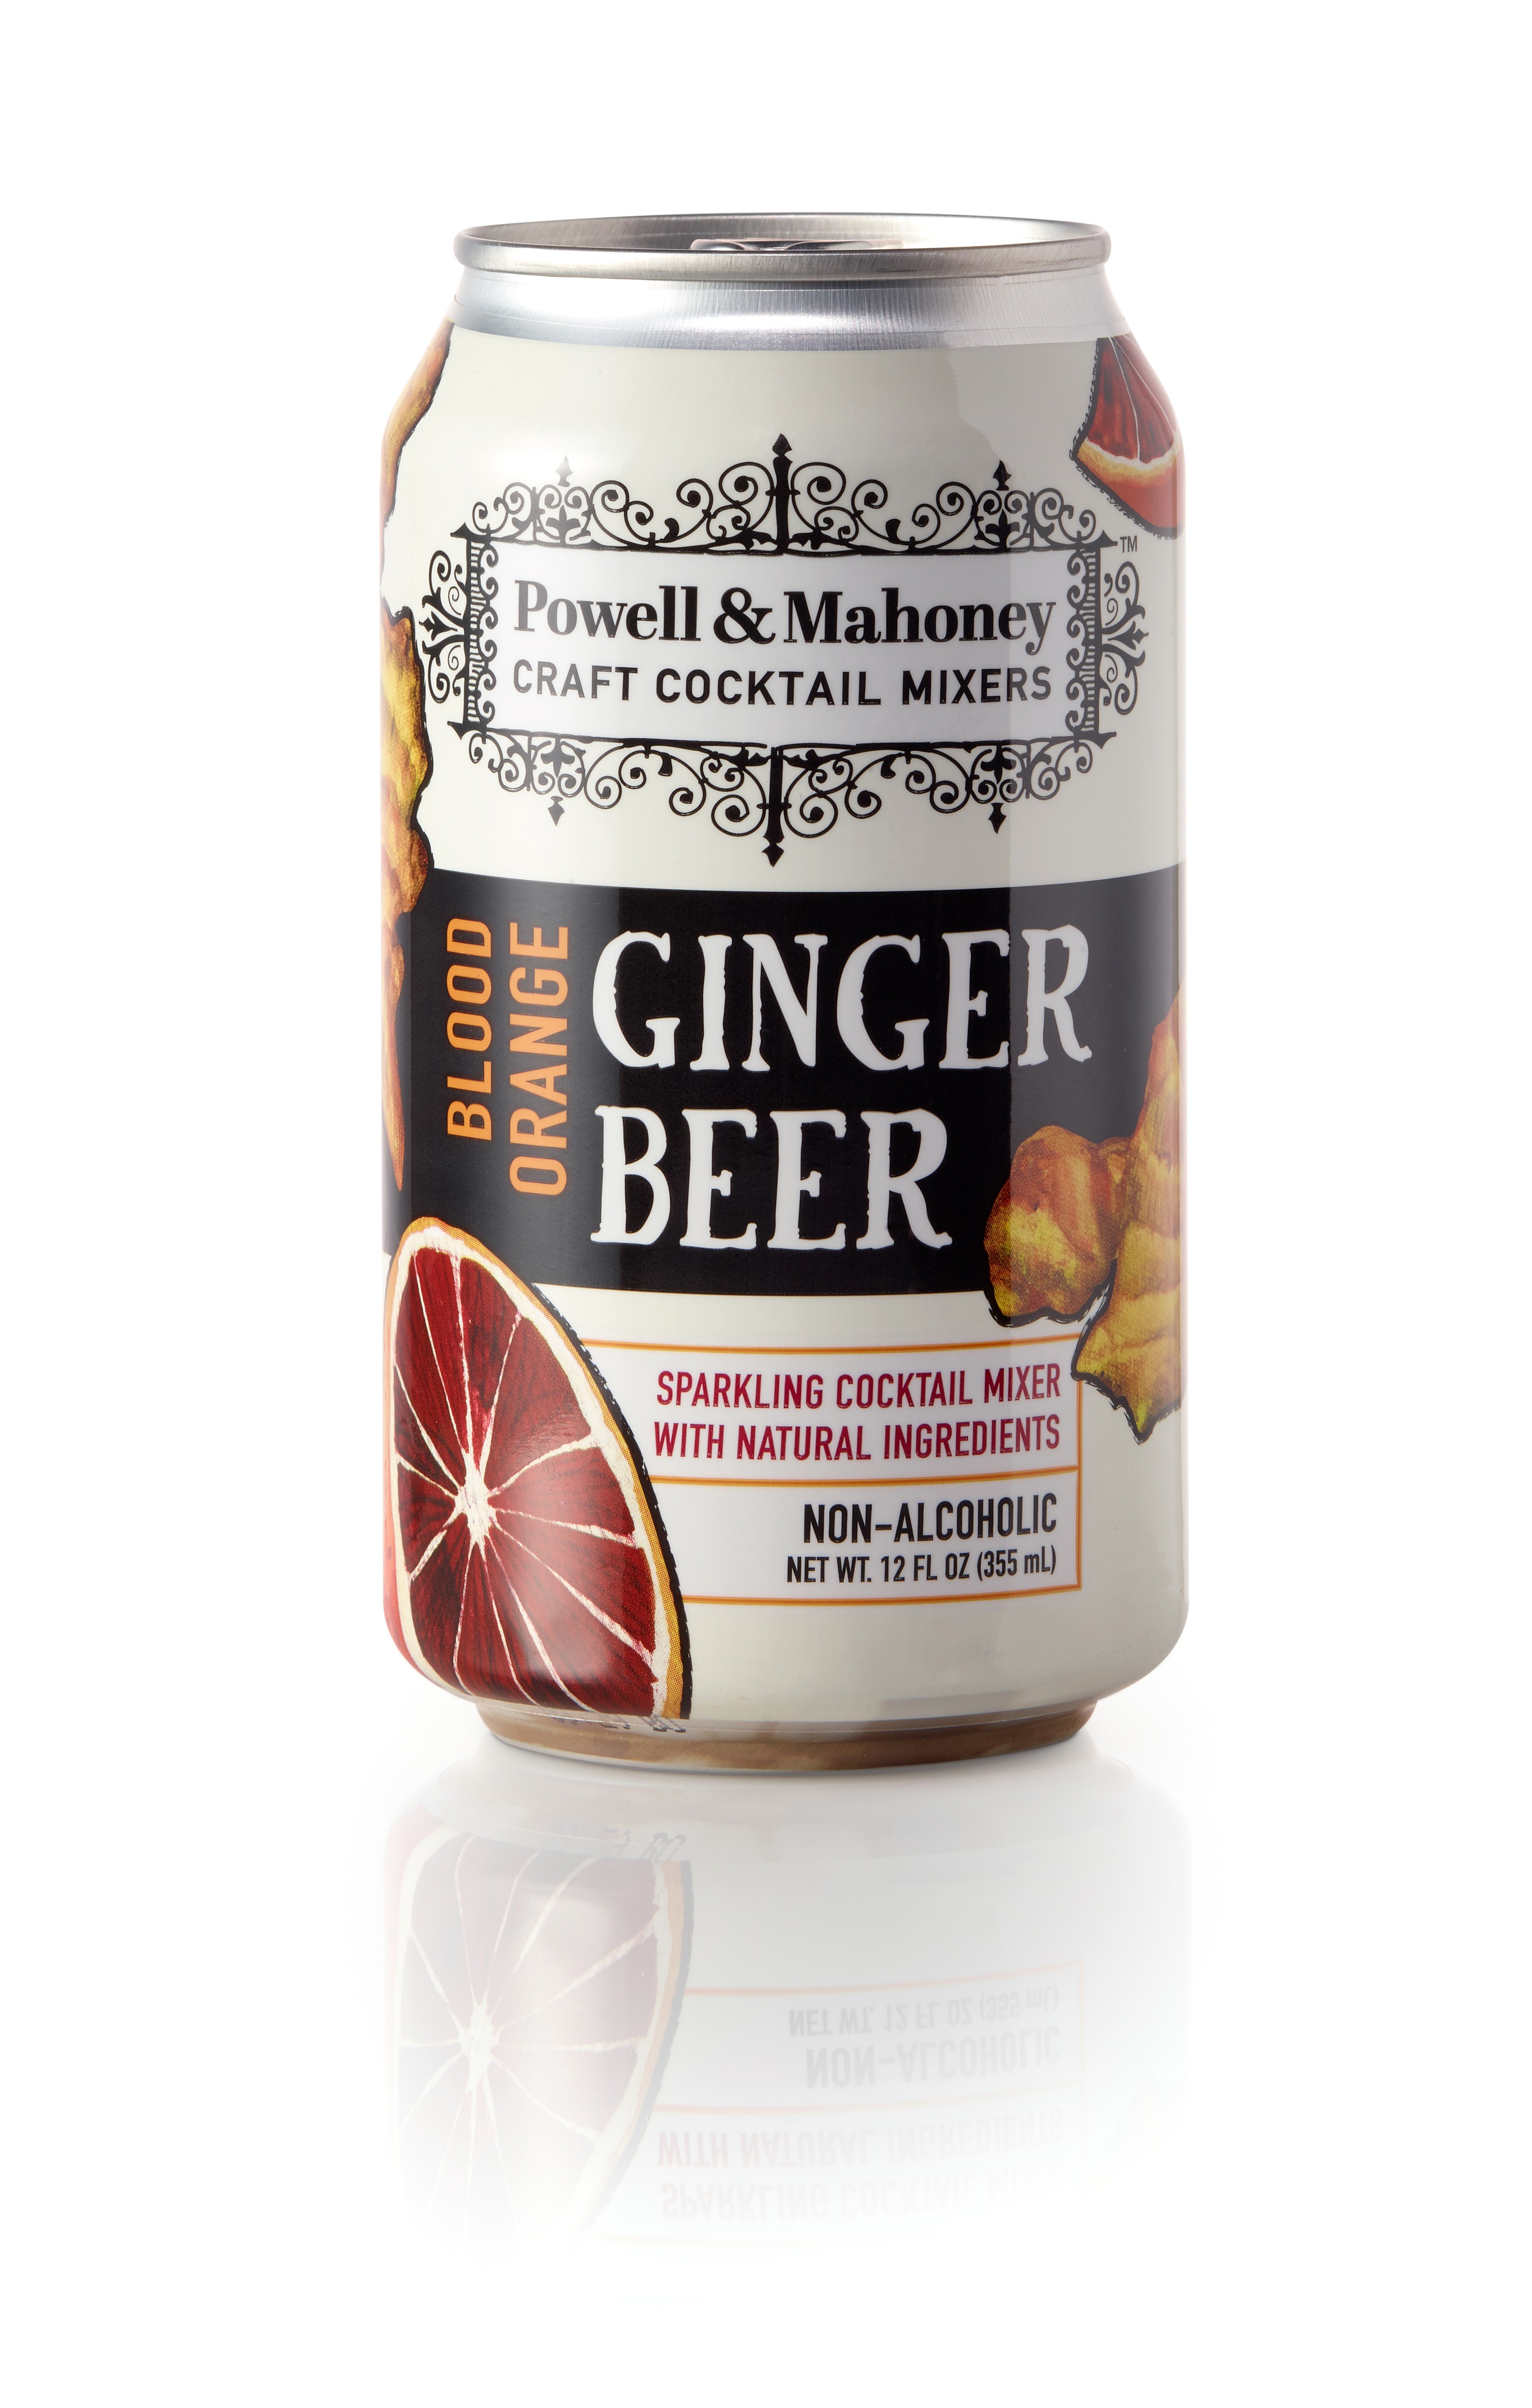 Powell & Mahoney Blood Orange Ginger Beer (12oz Can) - 4 pack case